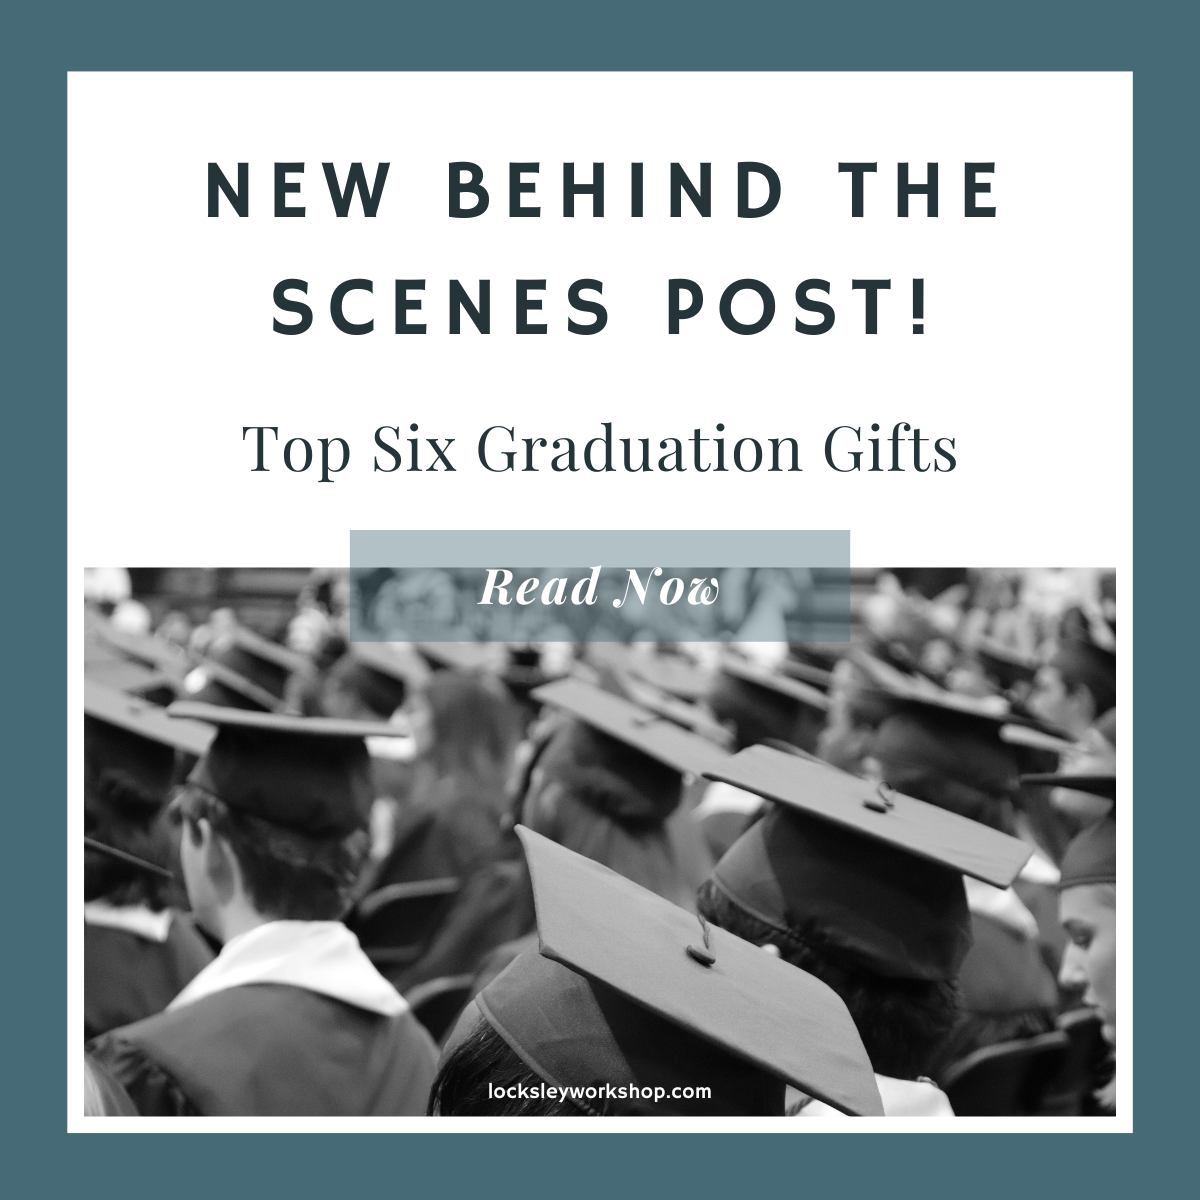 Top 6 Graduation Gifts